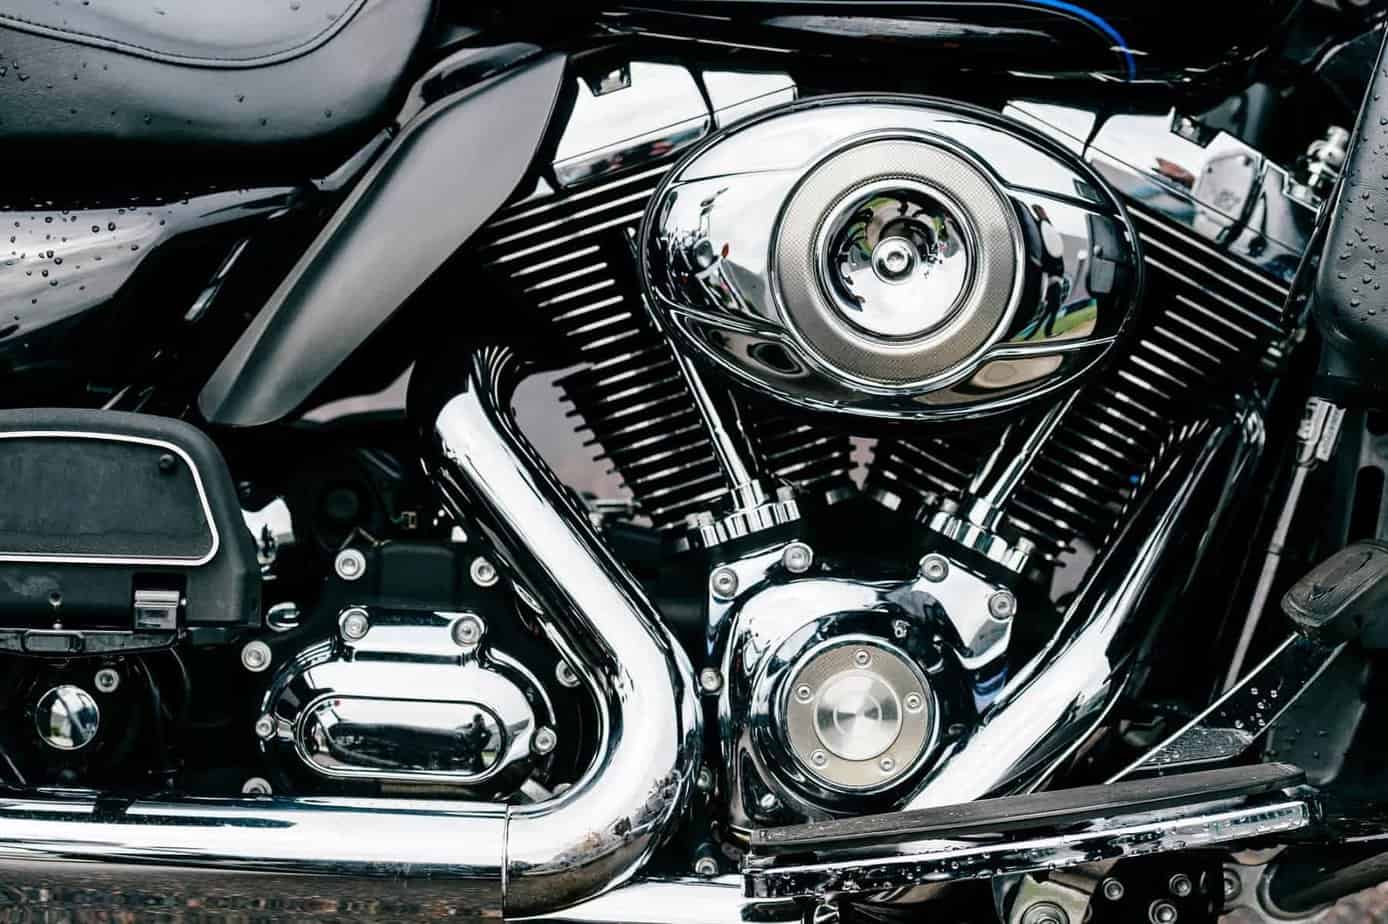 Harley-Davidson Engines